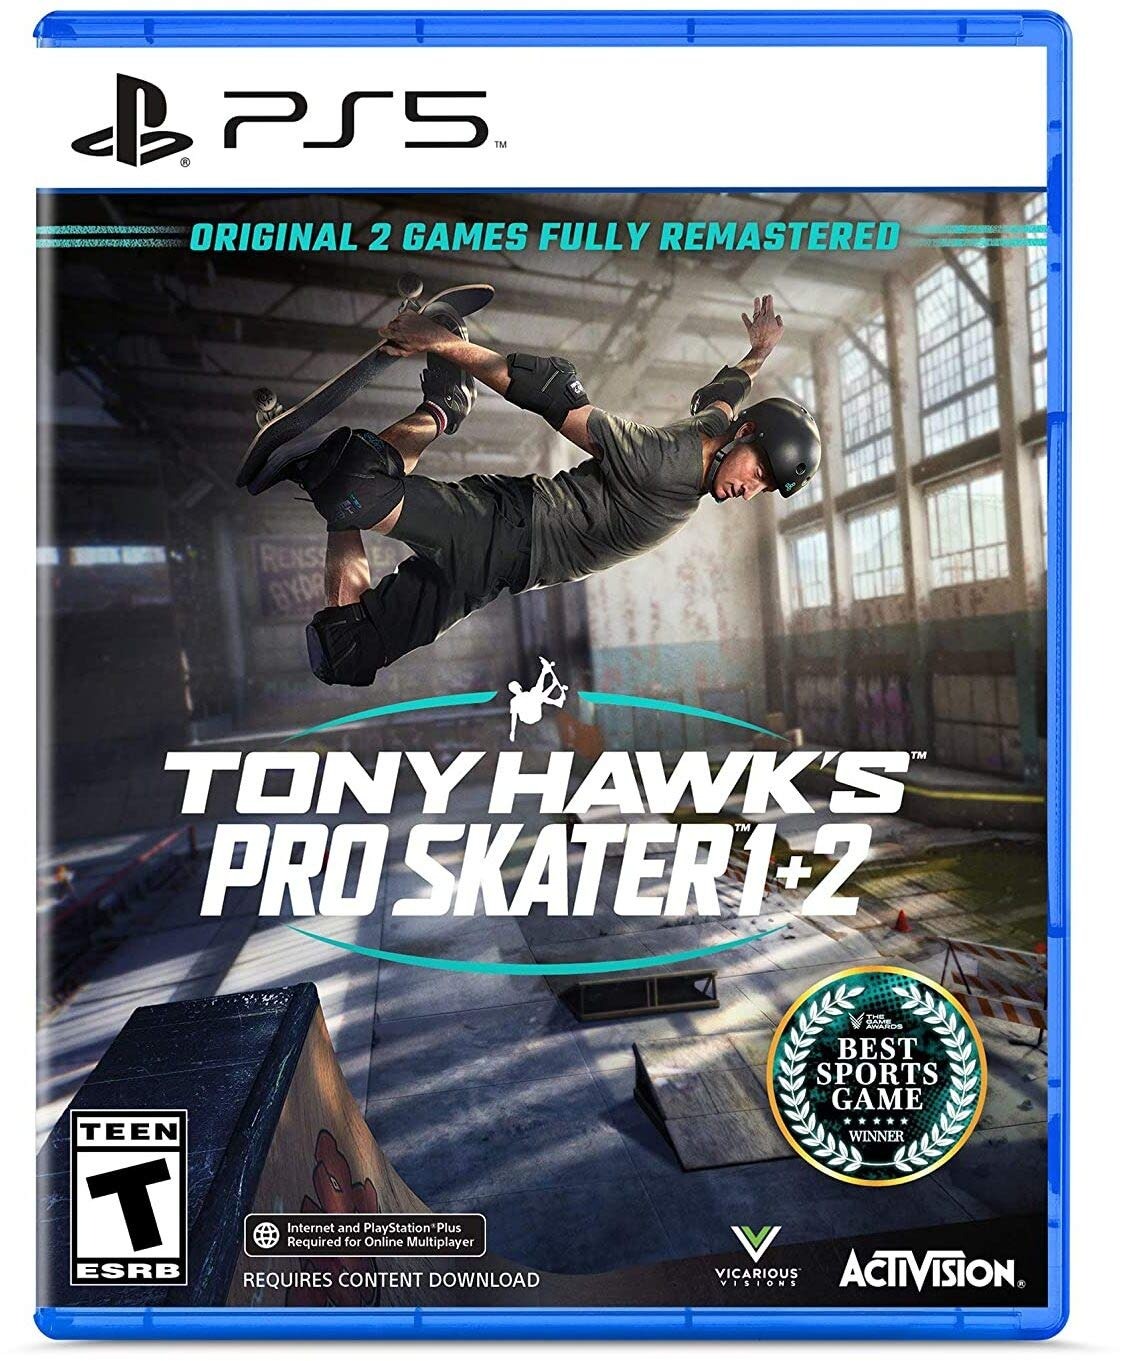 YMMV in-store Tony Hawk's Pro Skater 1+2 - PlayStation 5 $5